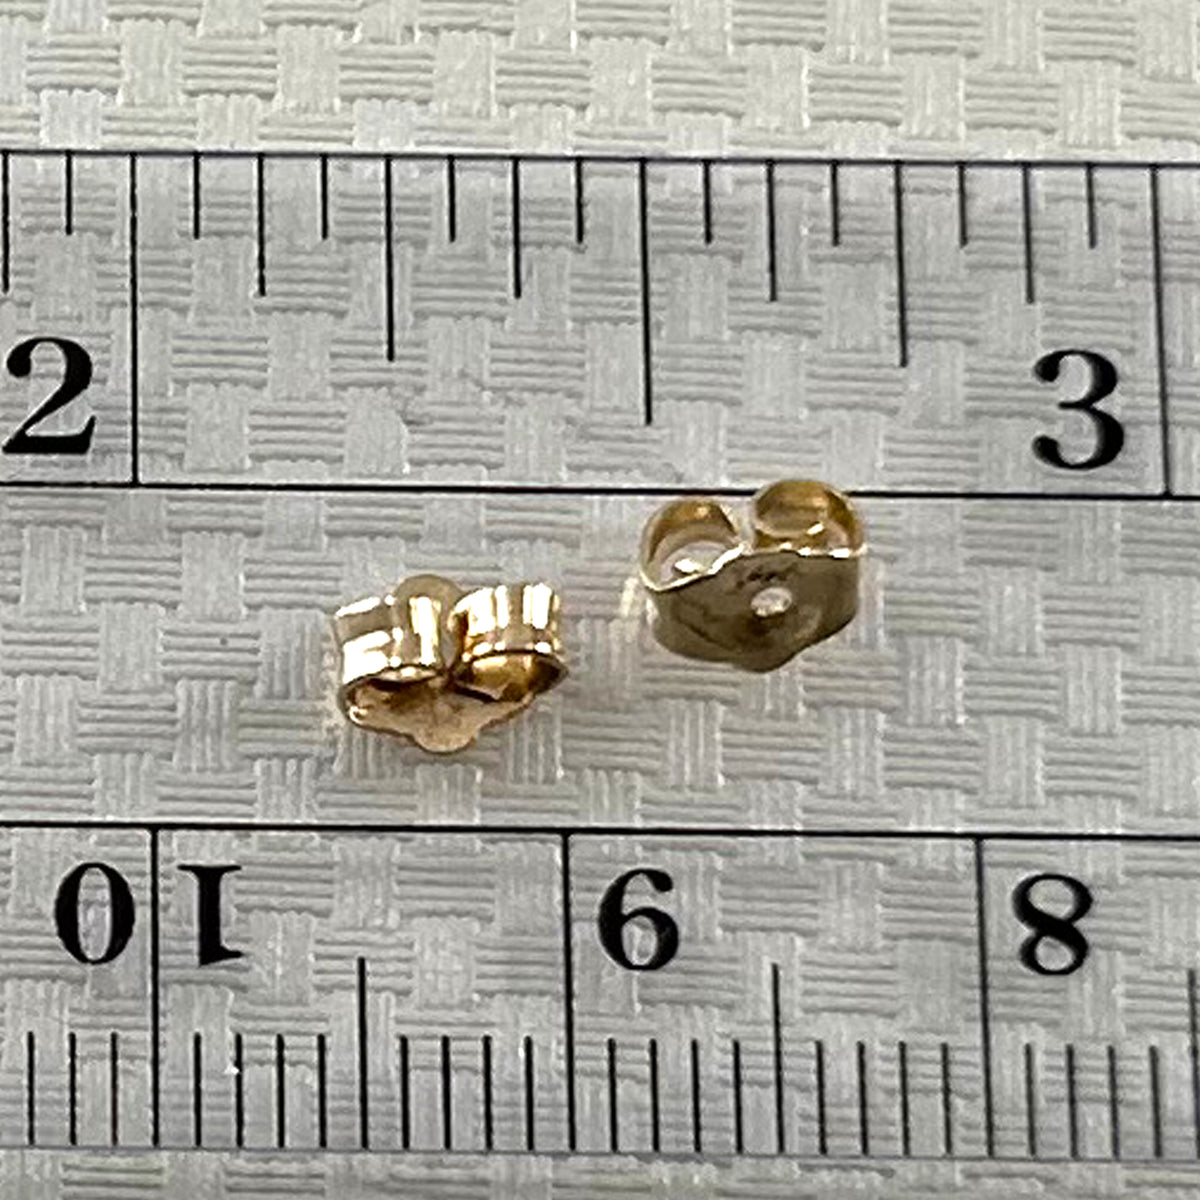 P1598-Pair-14k-Gold-Earrings-Backing-Good-for-Stud-Earrings-DIY – The Pearl  Jewelers